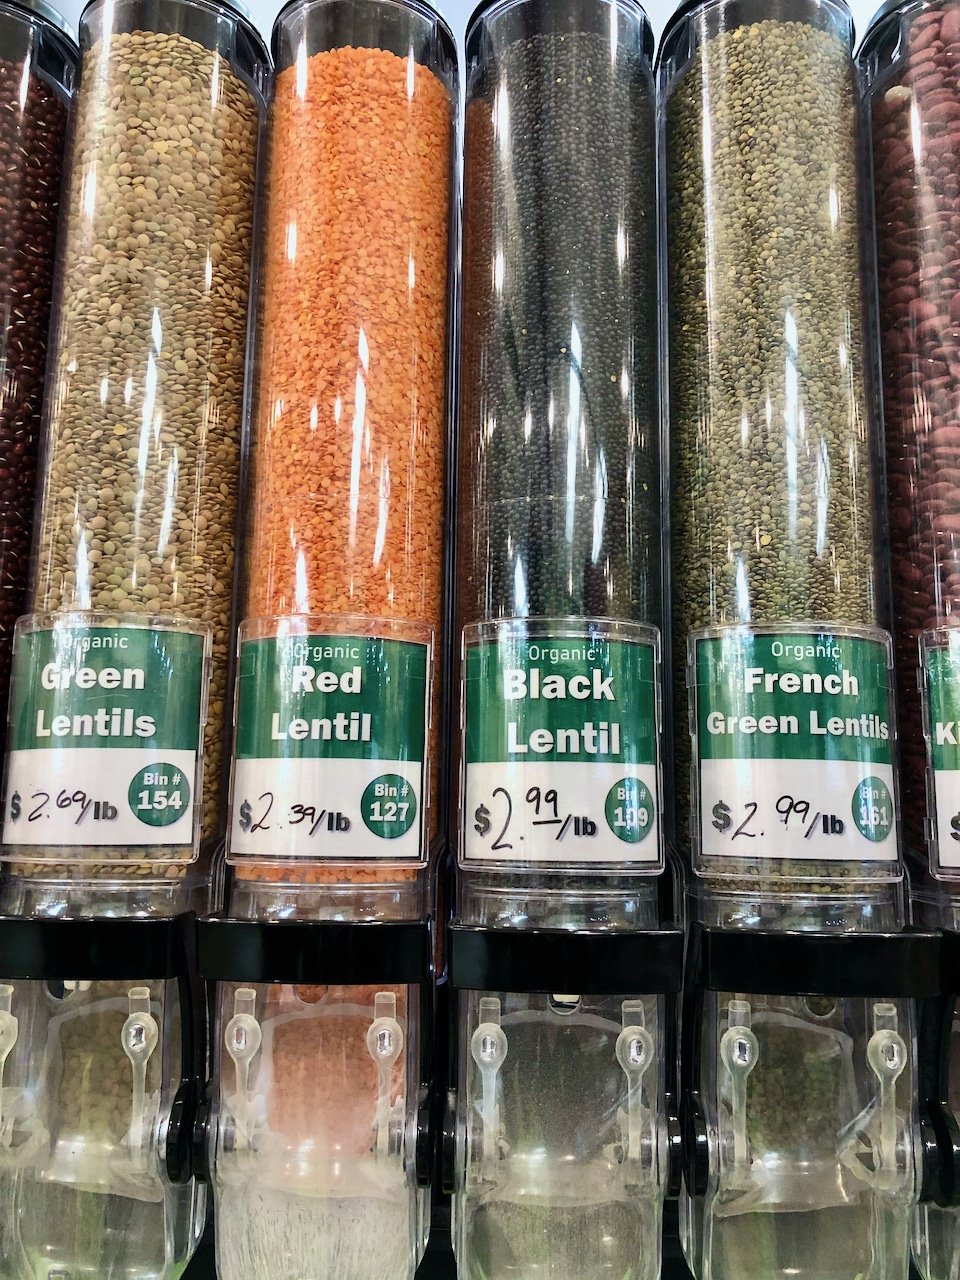 lentils in bulk bins at a healthy food store.